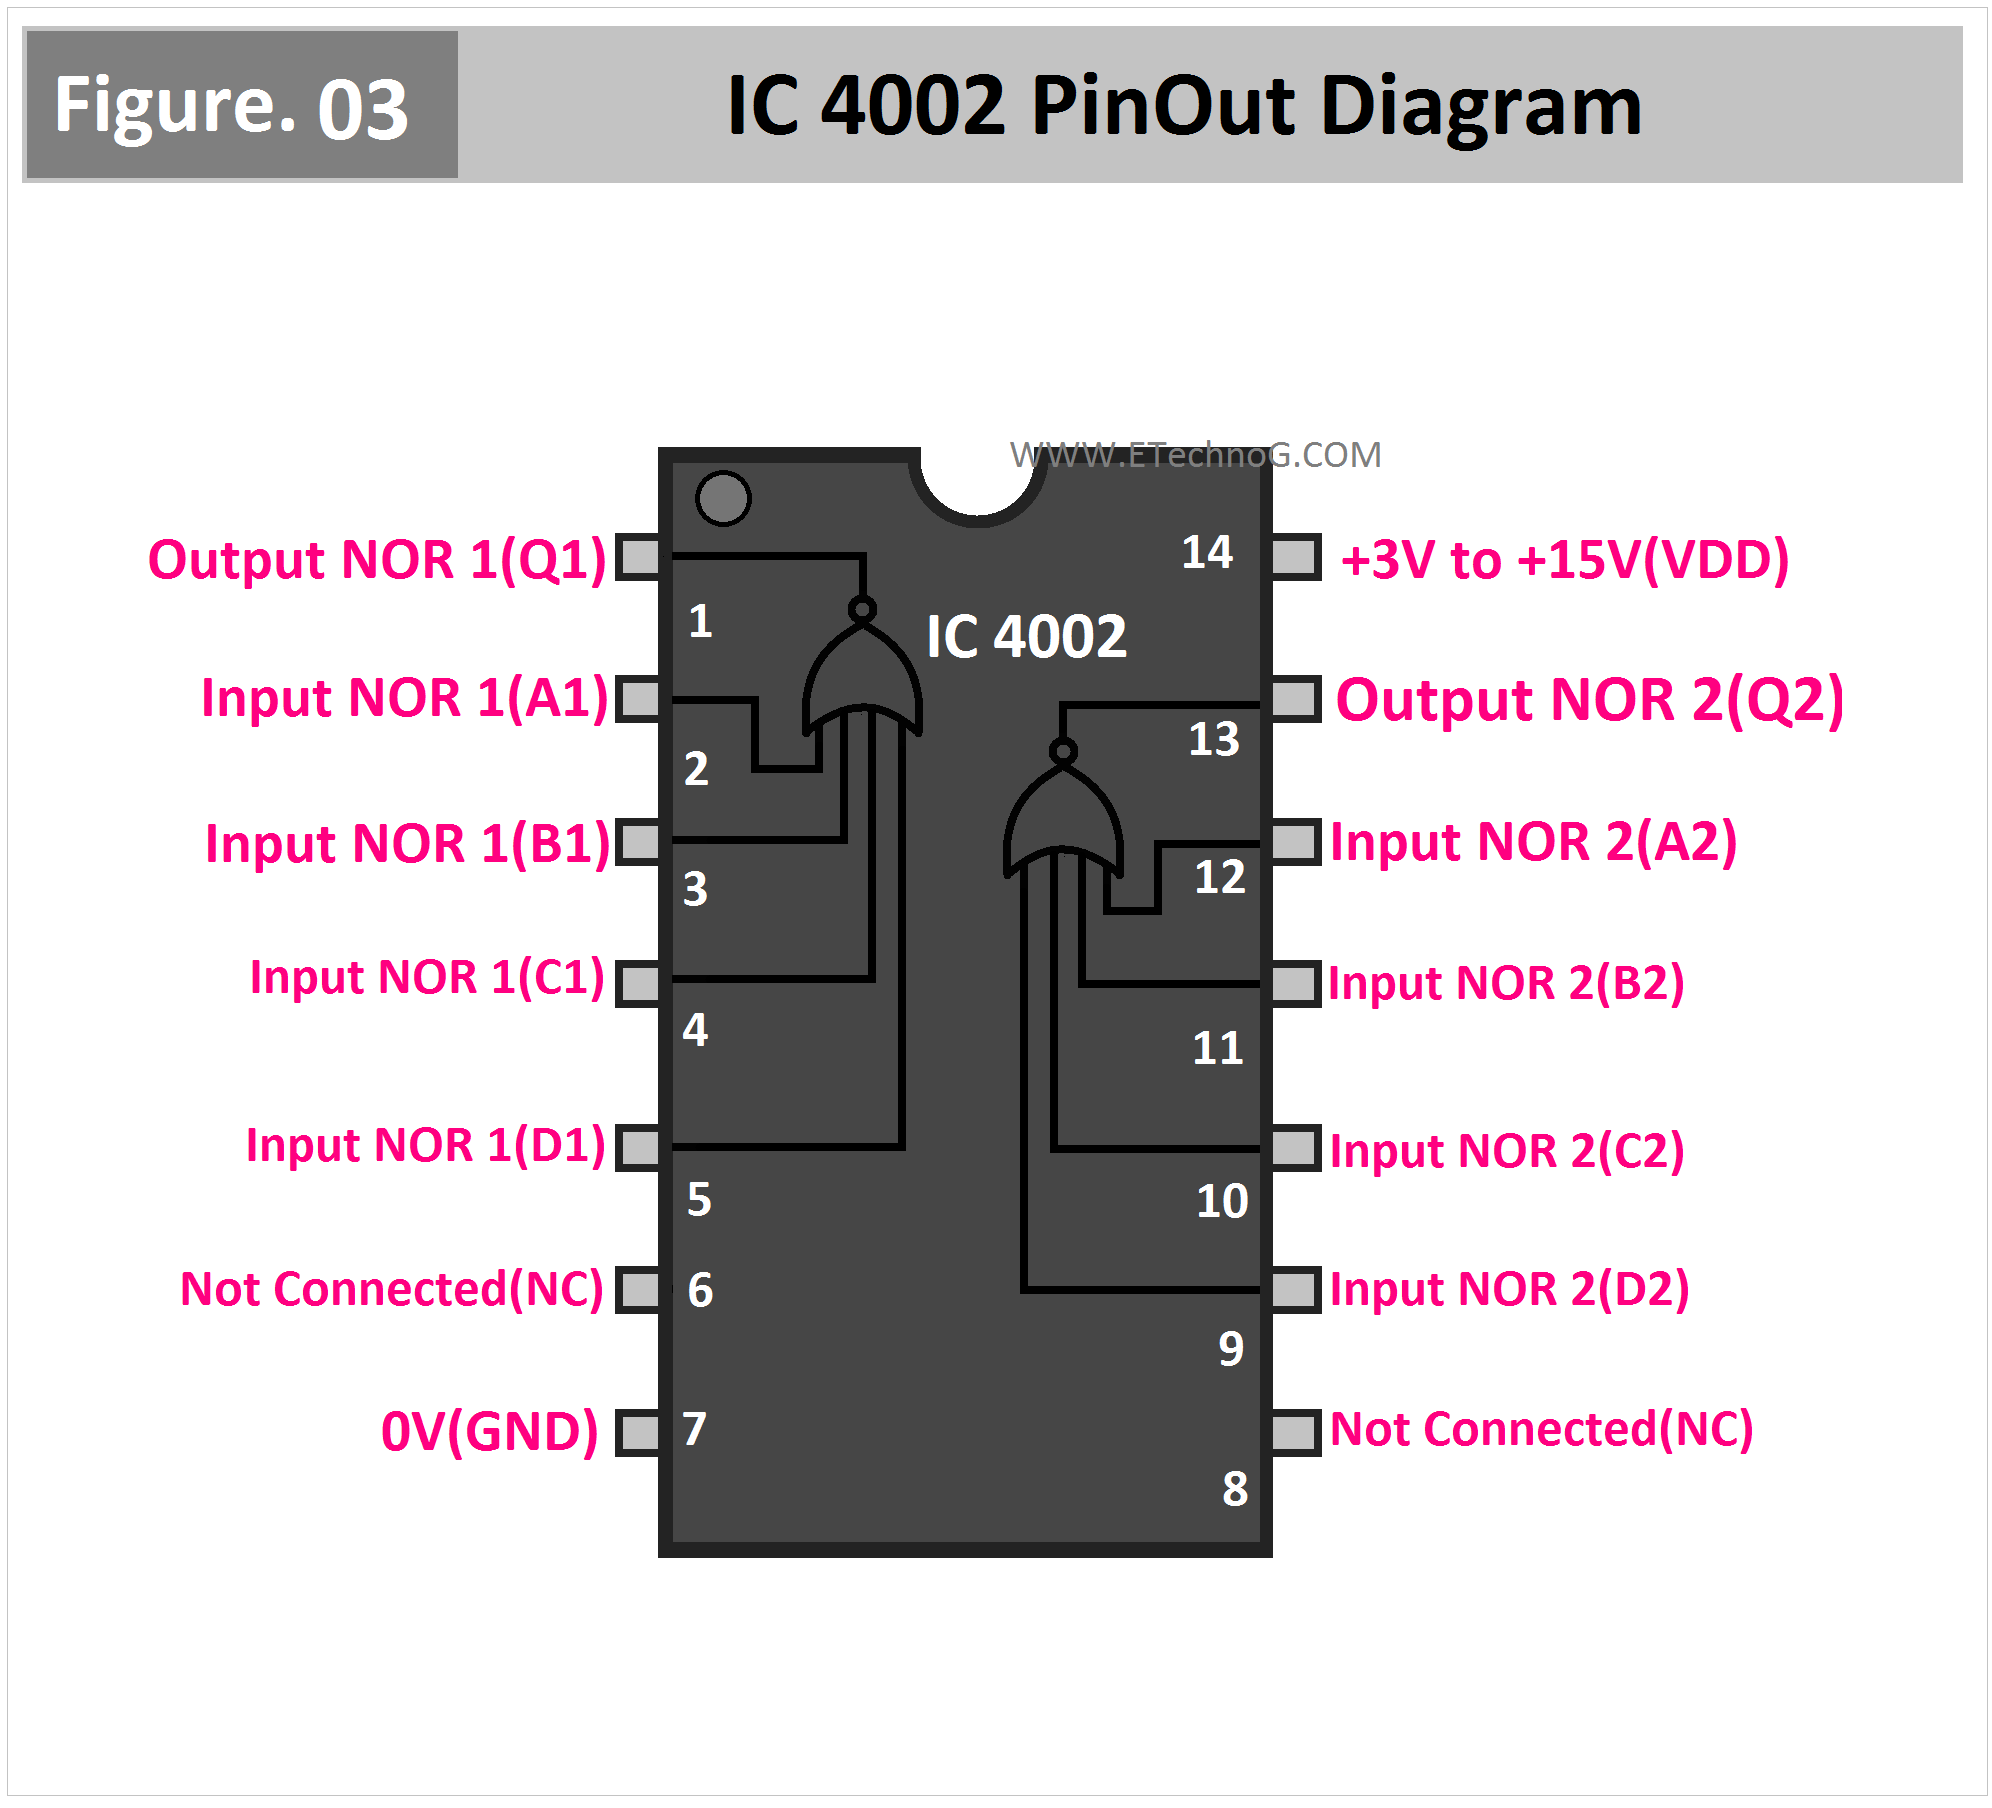 IC 4002 Pinout Diagram